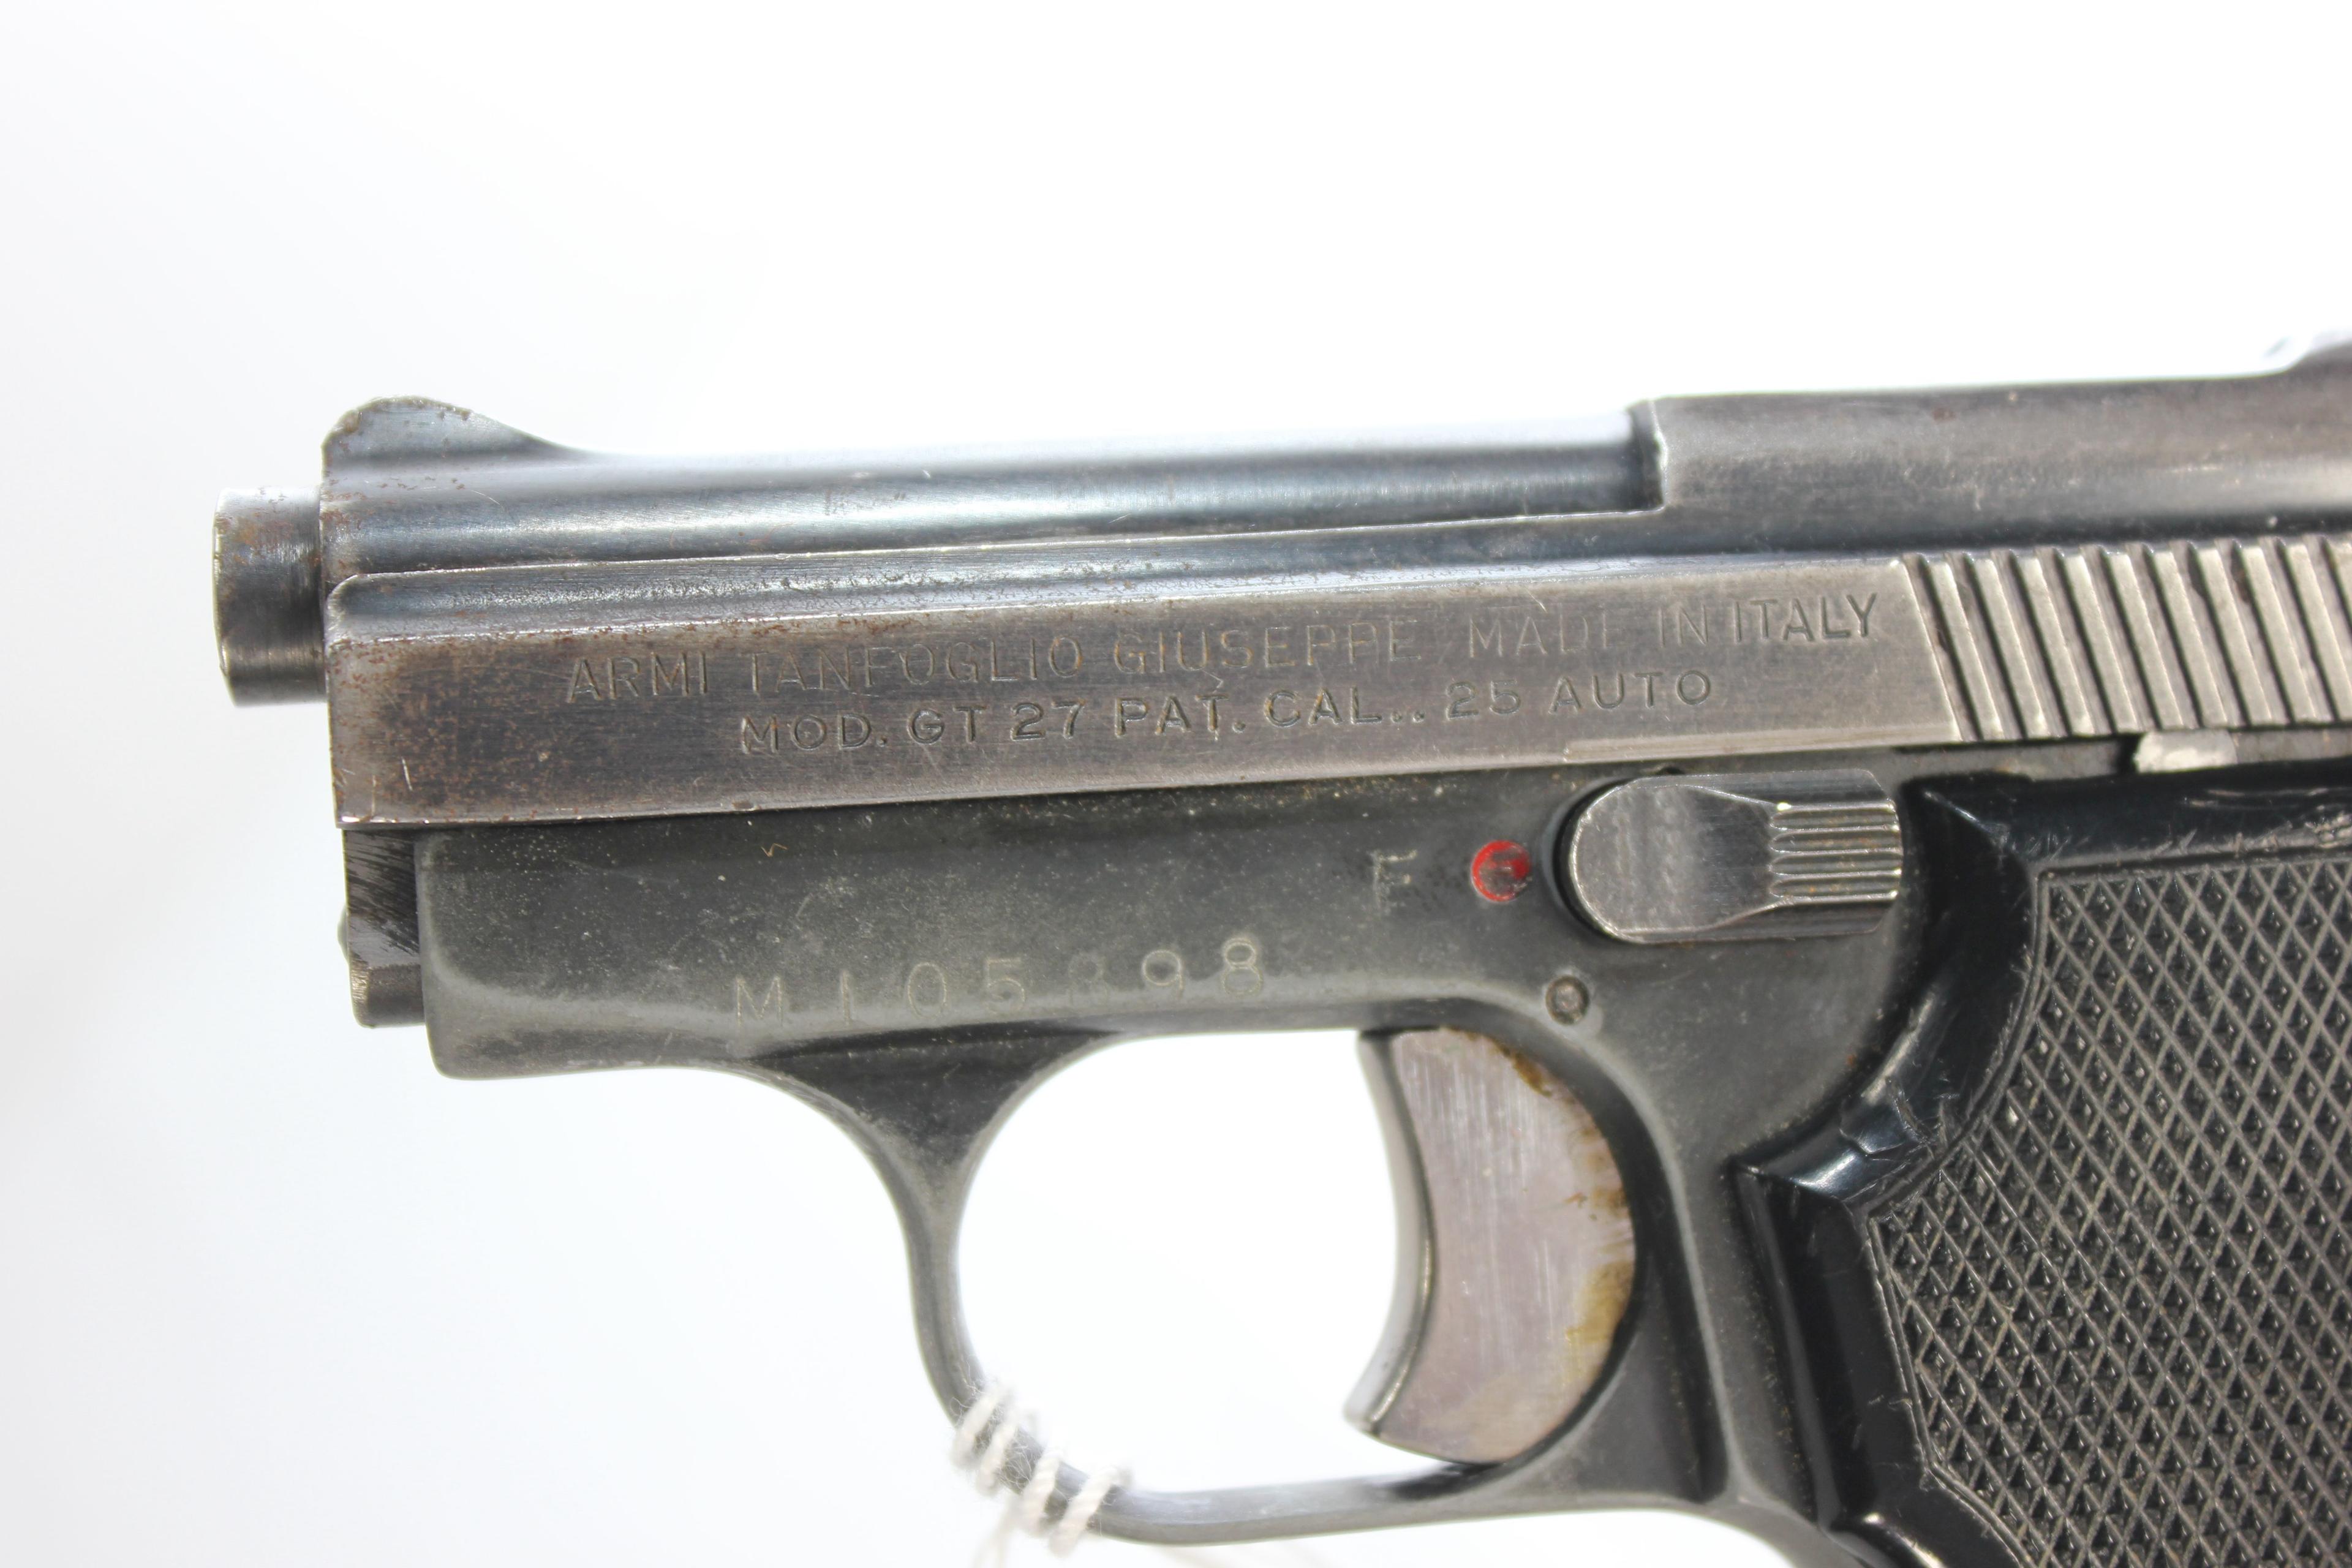 Armi Tanfoglio Model GT27 .25 Auto. Cal. Semi-Automatic Pistol w/Bakelite Grips; Made in Italy; SN M